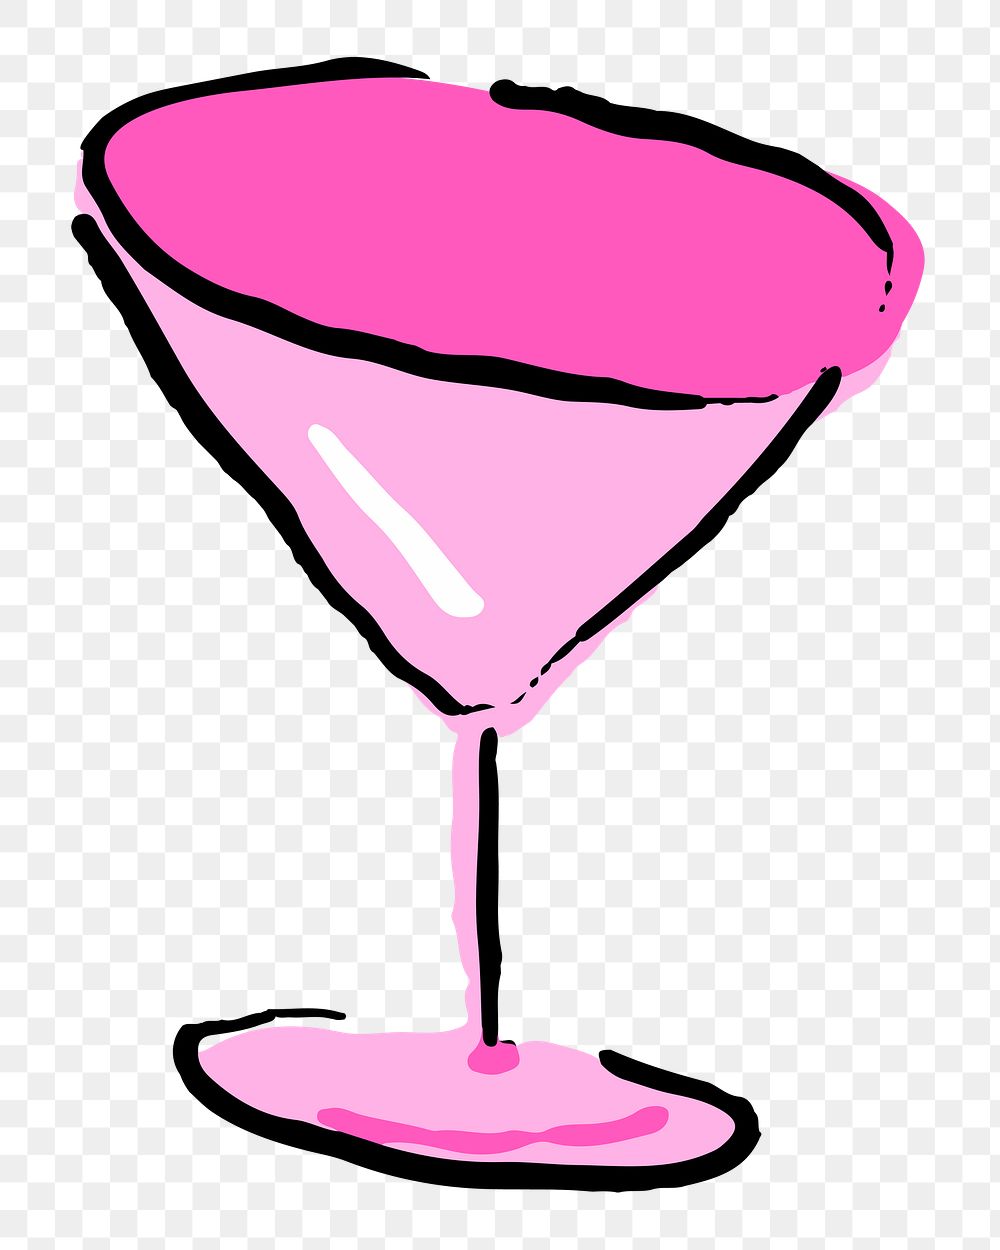 Pink martini glass png sticker illustration, transparent background